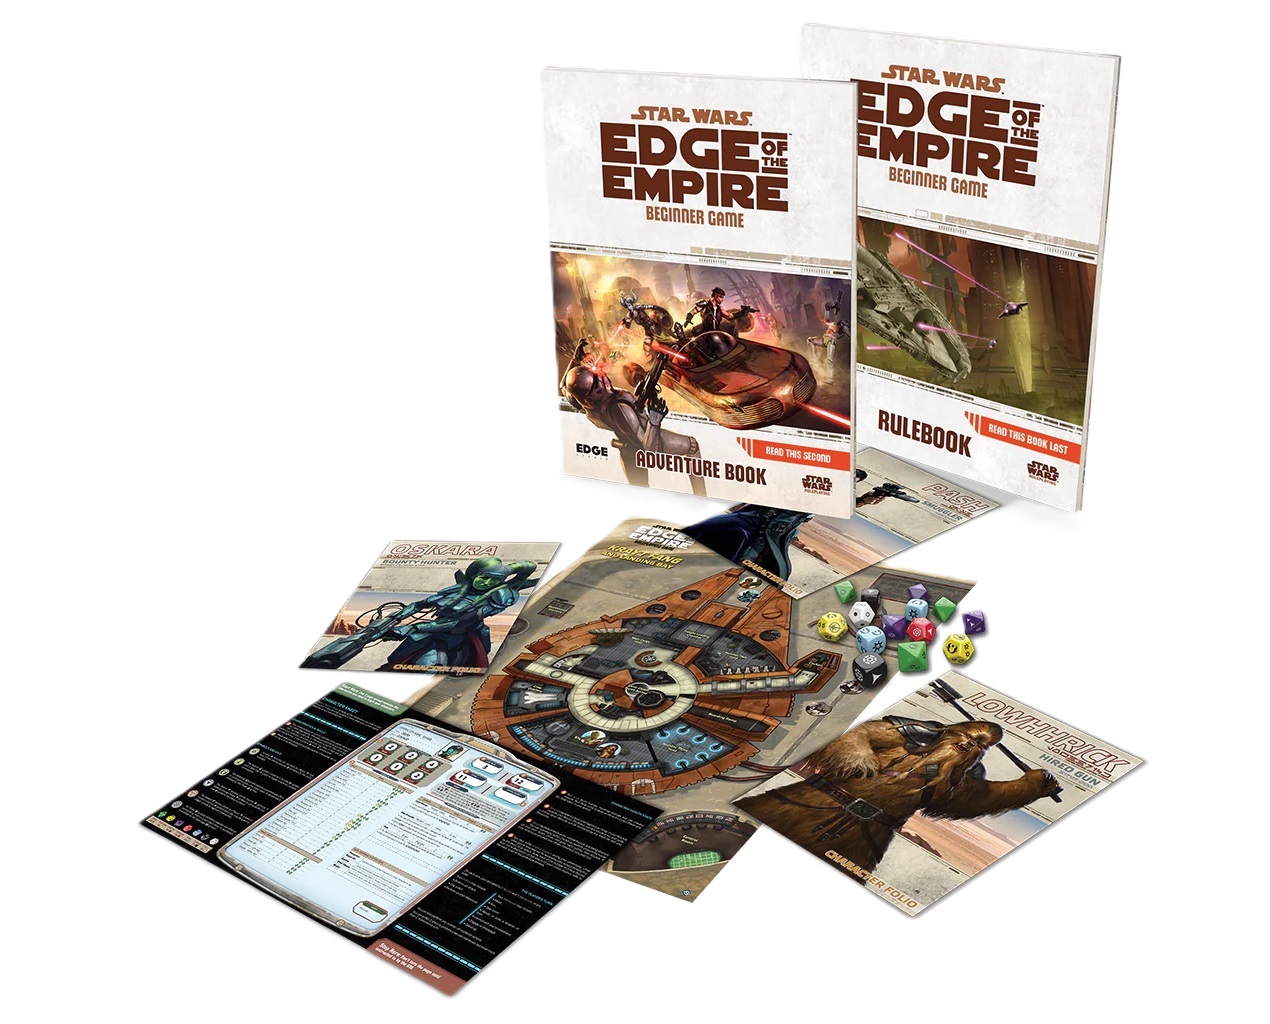  Star Wars: Edge of the Empire - Beginner Game